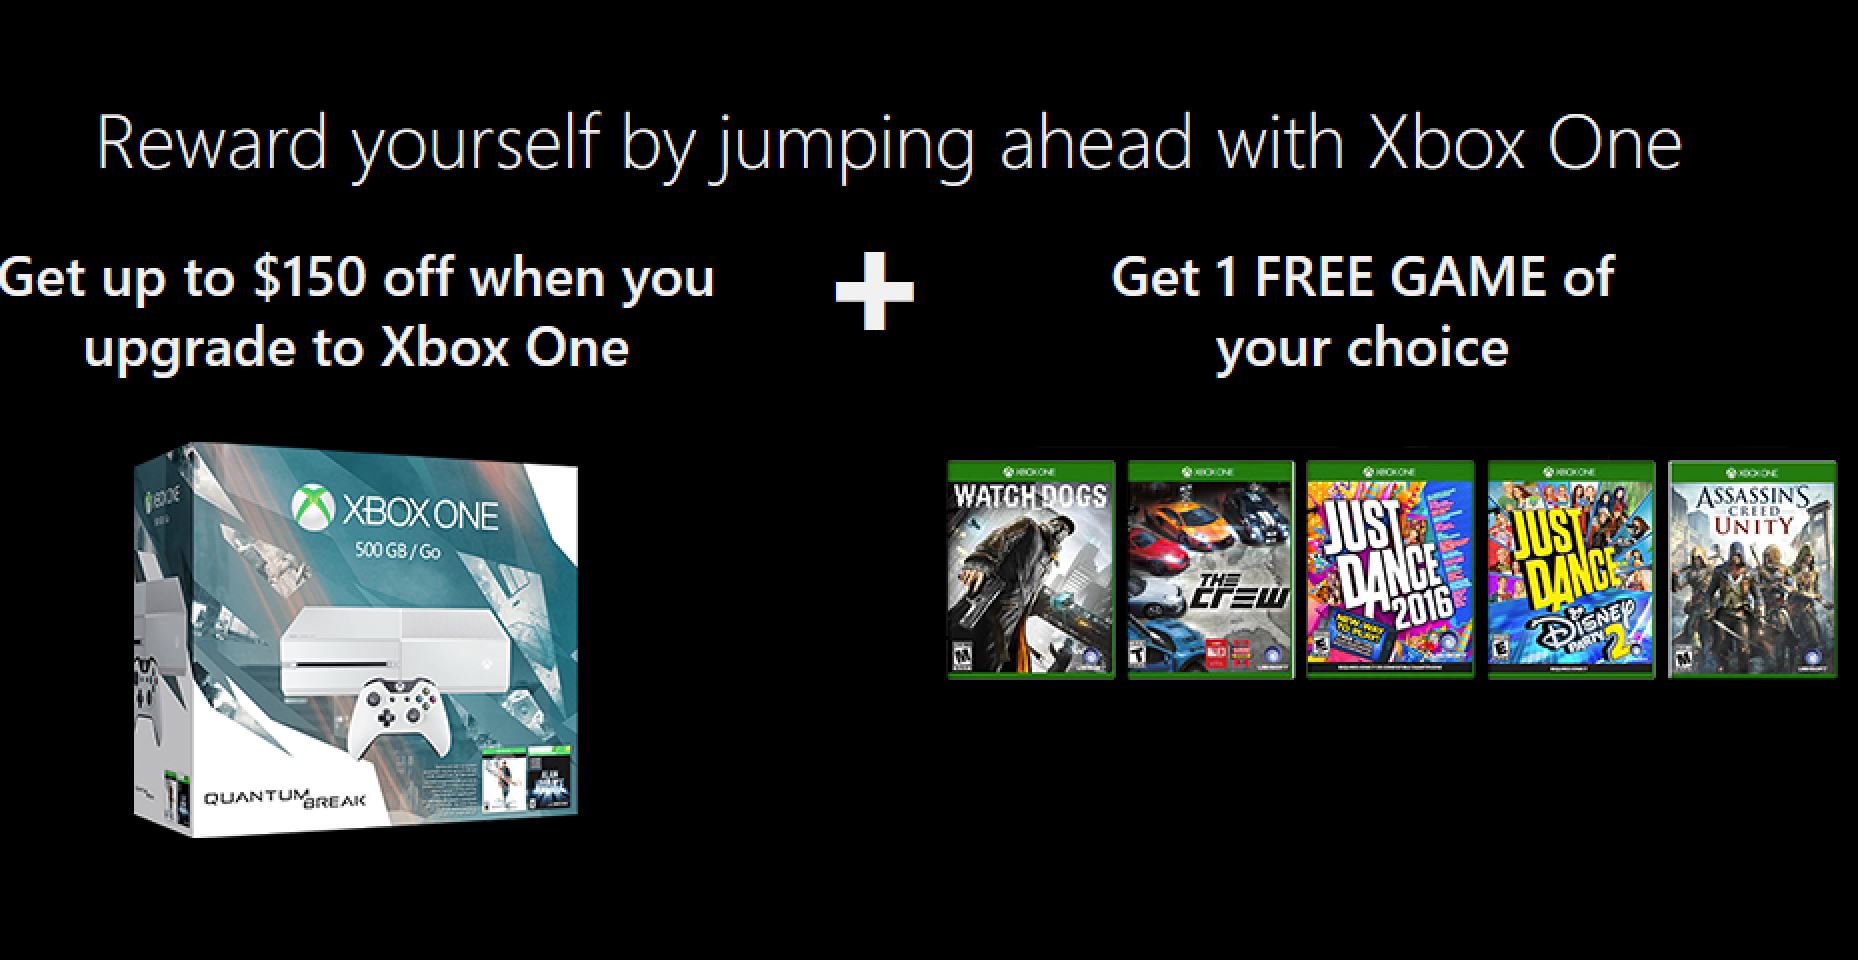 Xbox Live Rewards